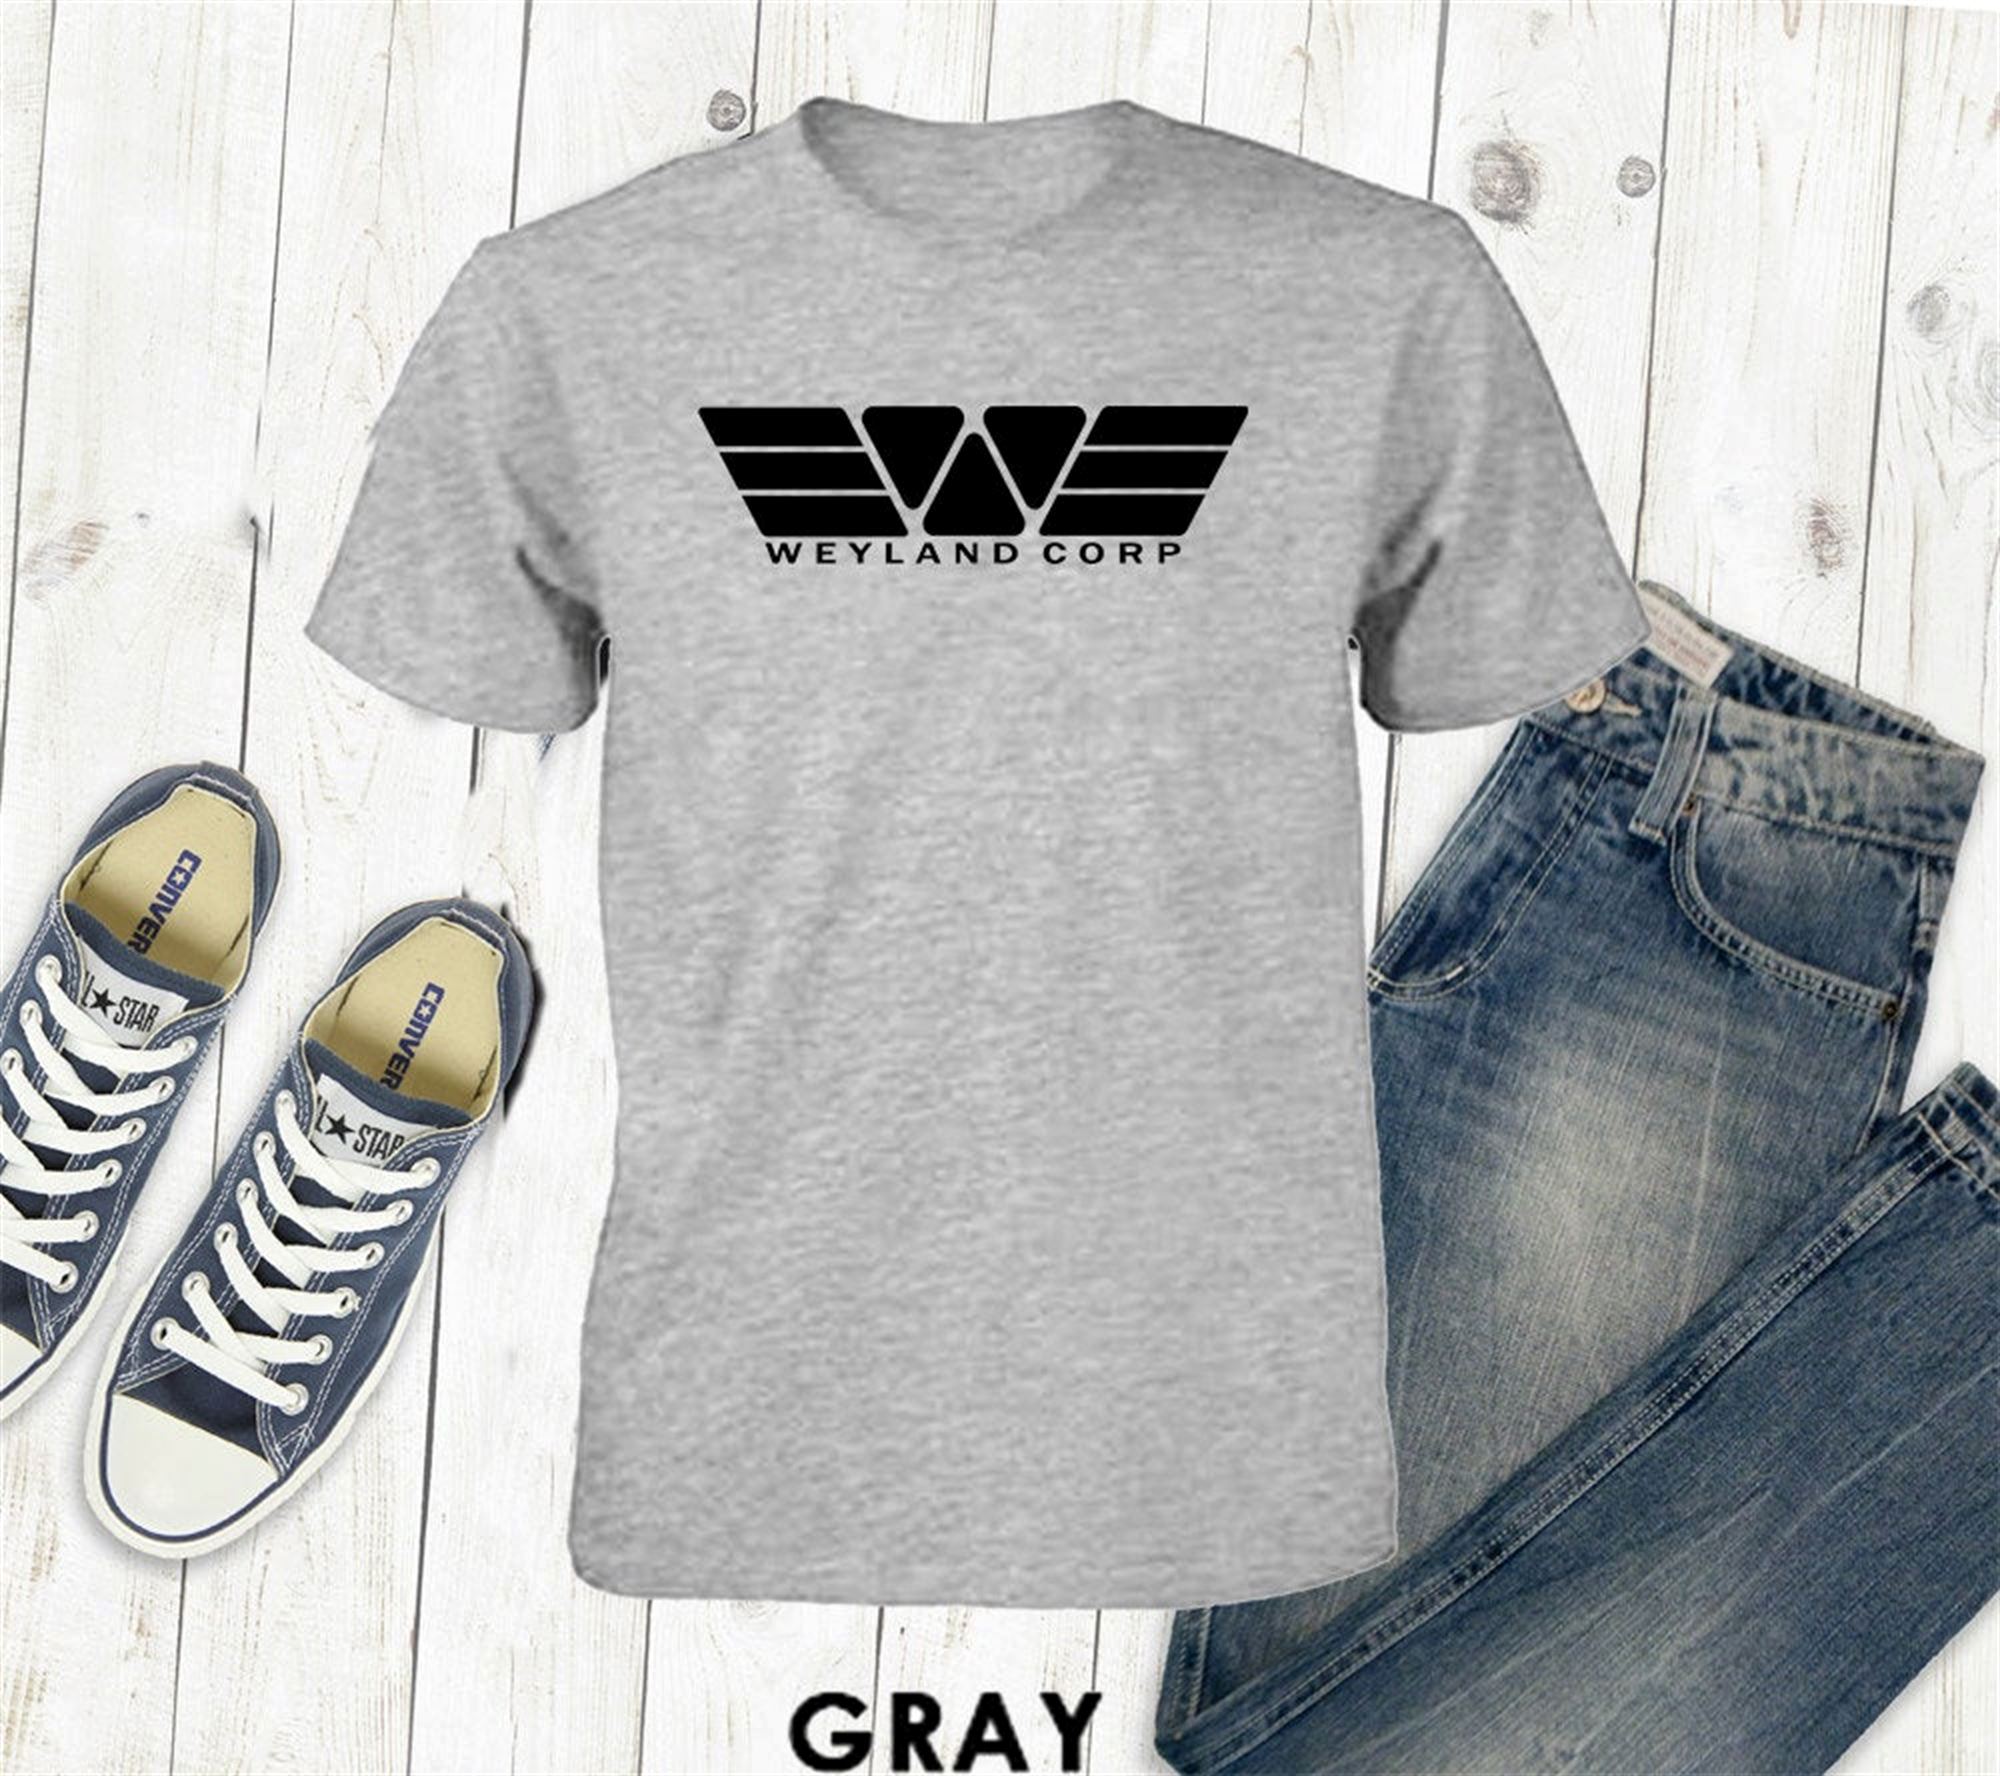 Attractive Weyland Corp Weyland Yutani Corporation Shirt T-shirt Unisex And Women Size Tee 